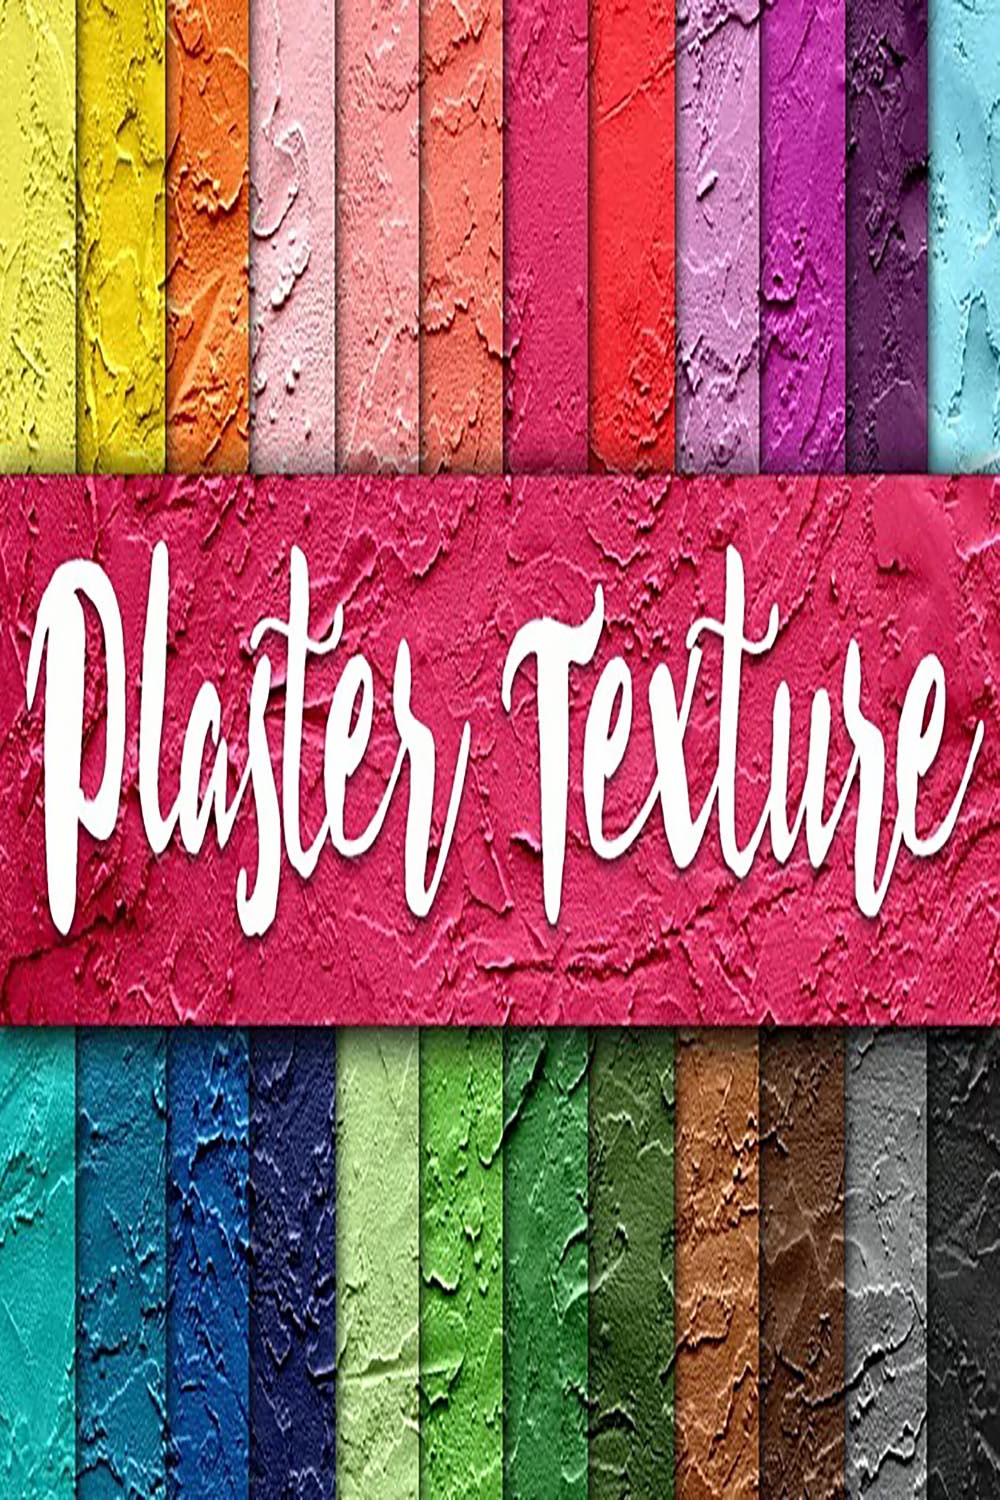 Plaster Texture Digital Paper pinterest preview image.